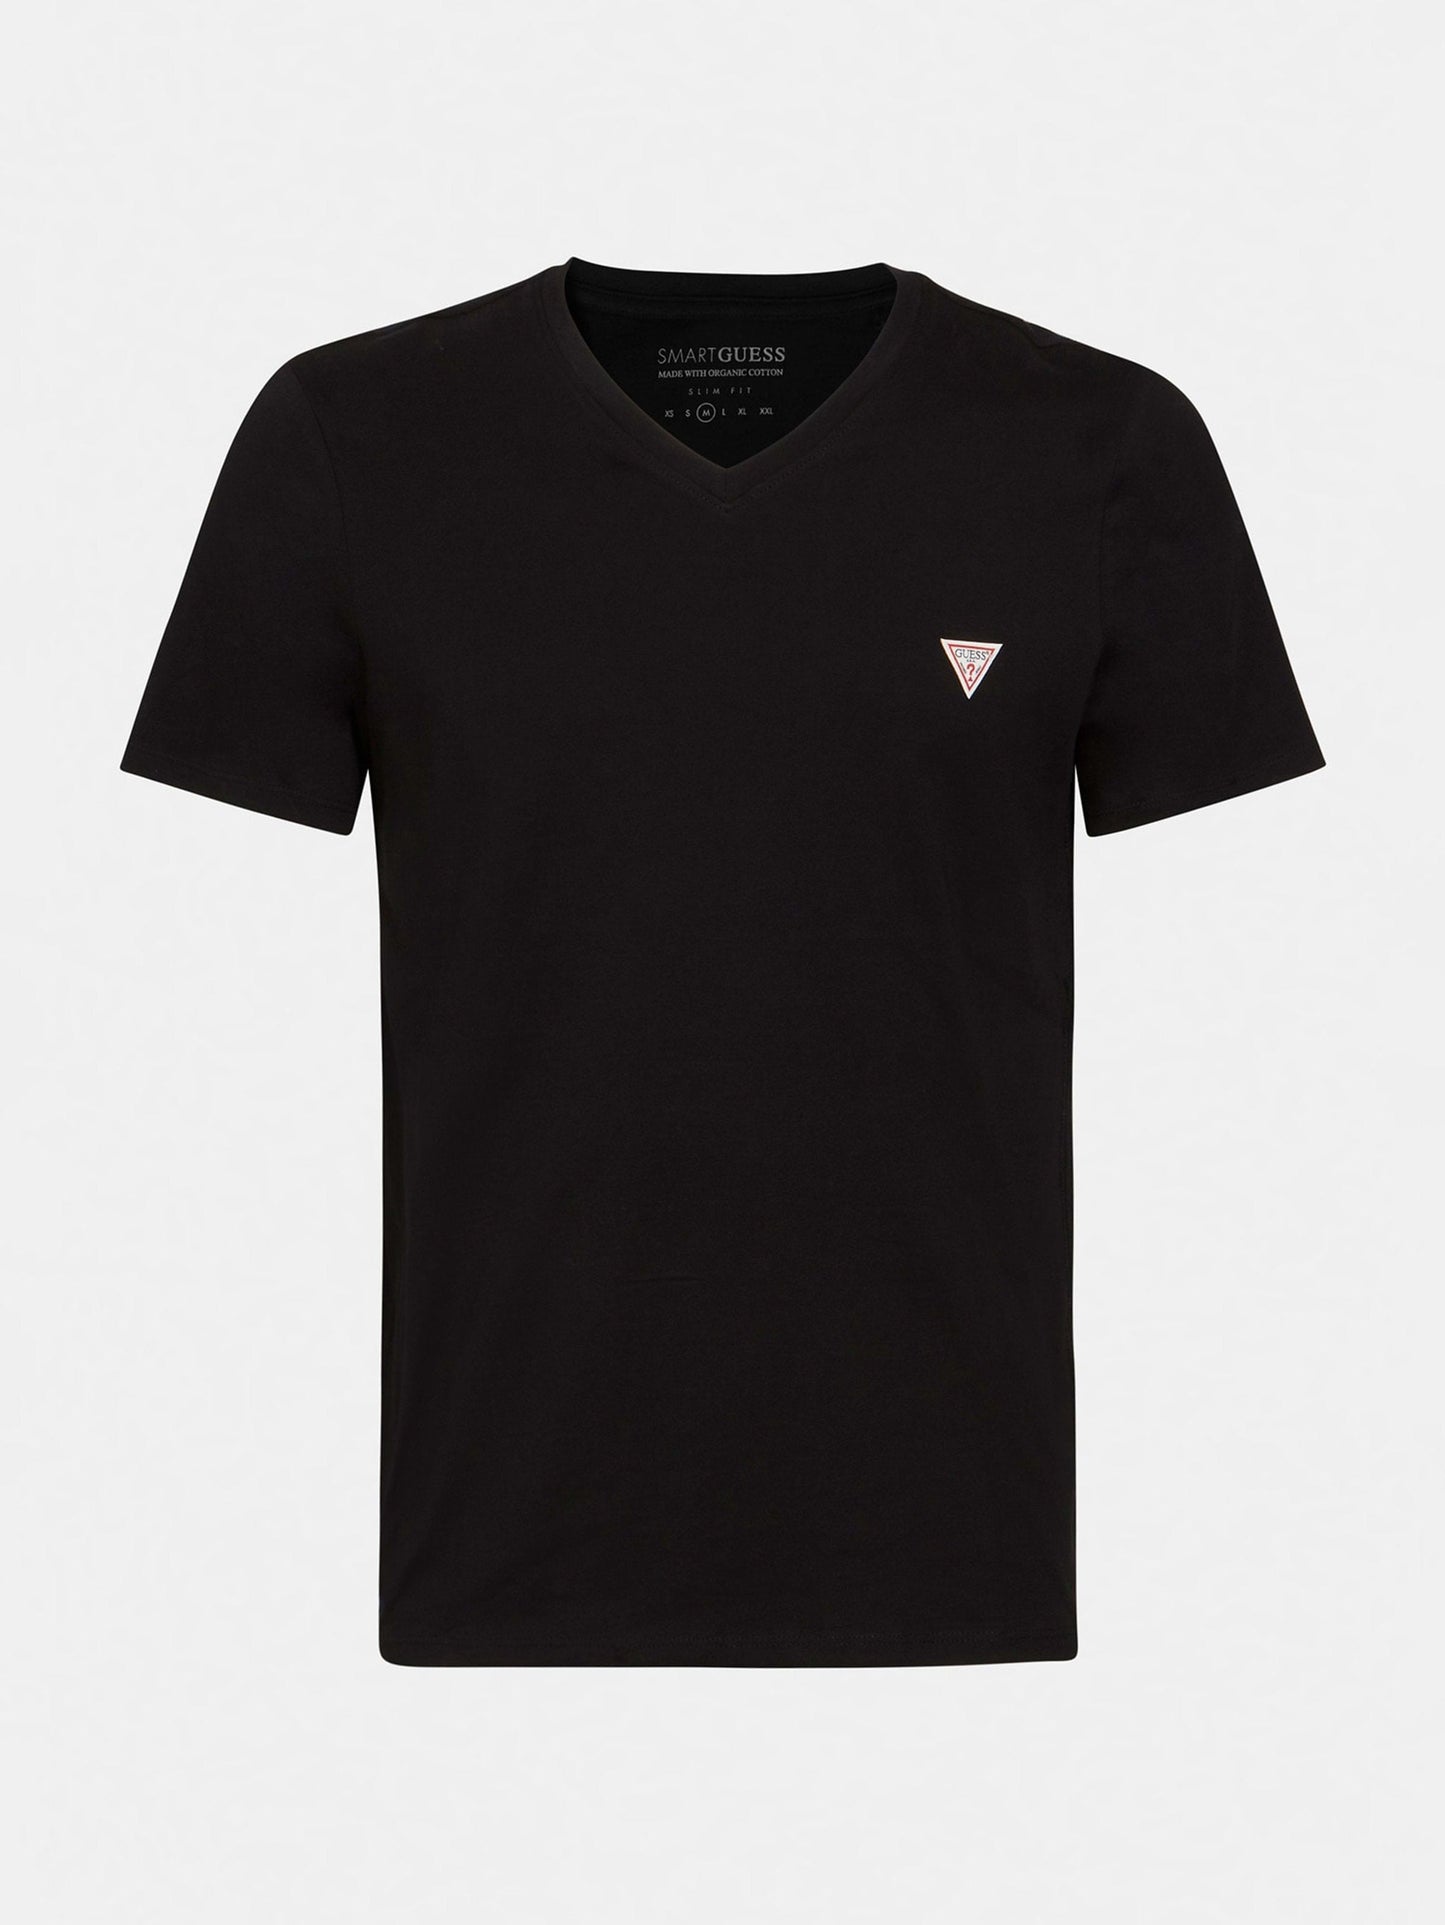 GUESS Mens Eco Black V-Neck Basic T-Shirt M1RI37I3Z11 Ghost  Front View